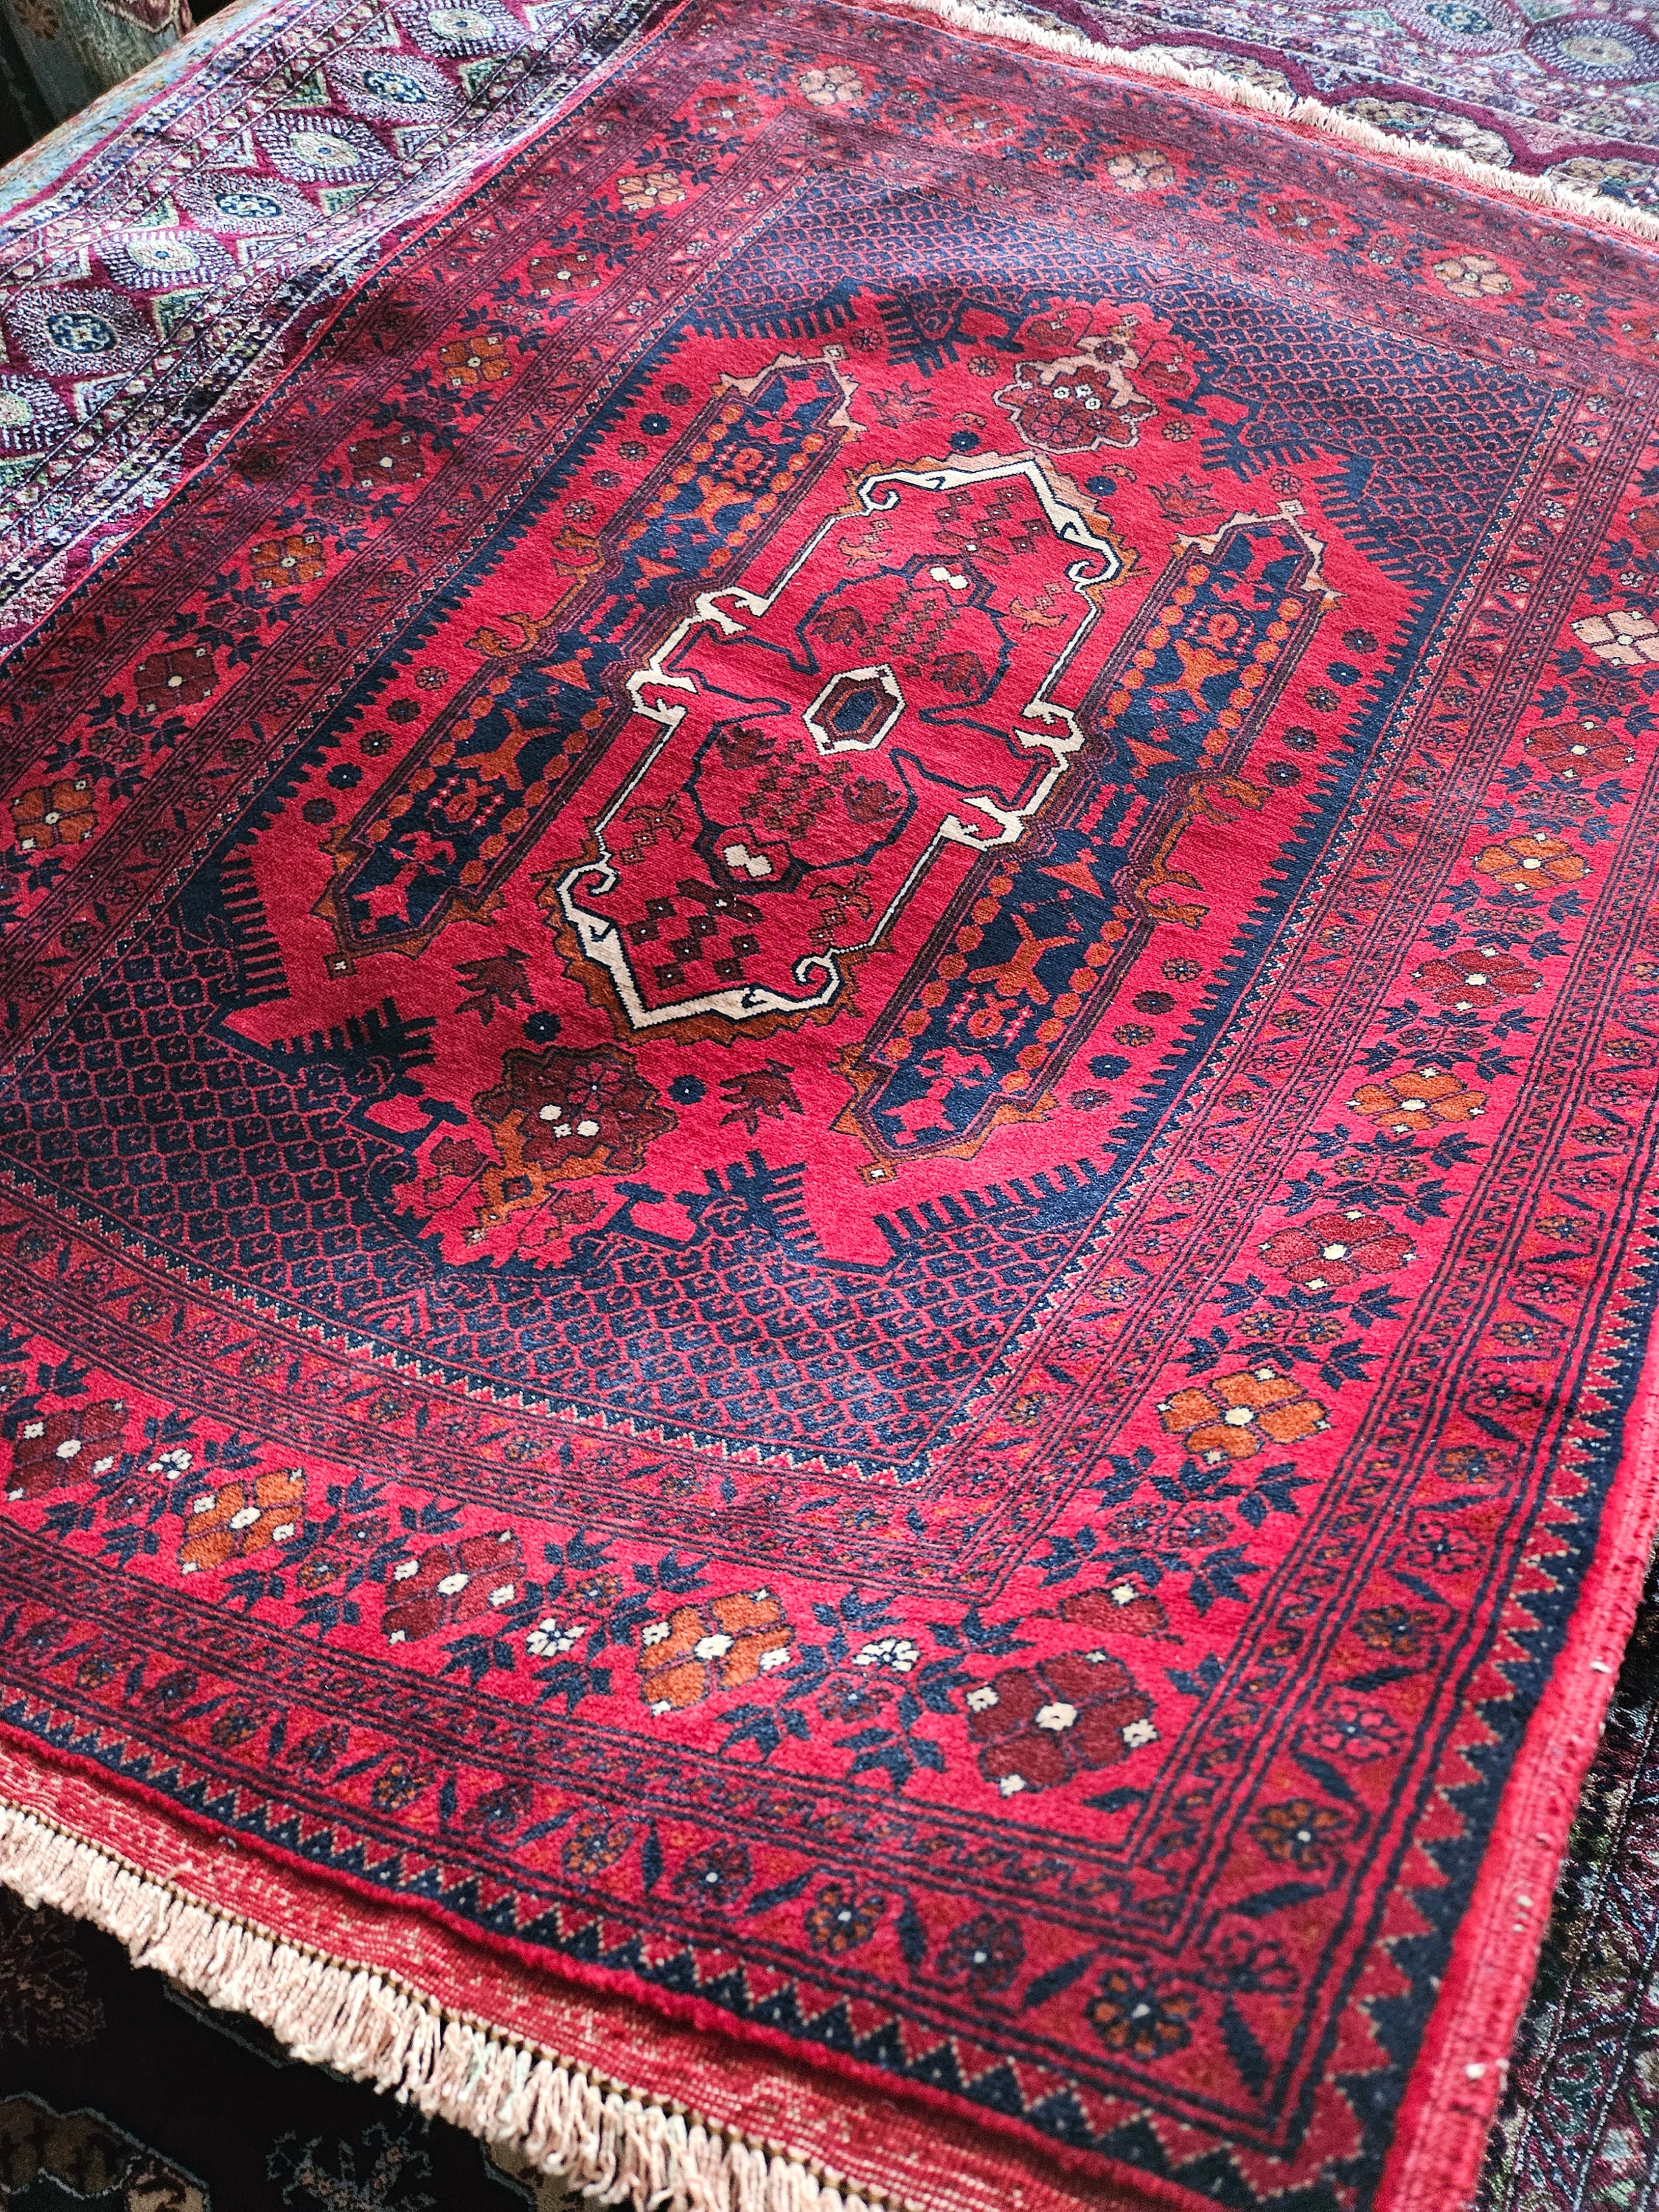 Small Afghan Rug, 3x5 Feet Red Carpet